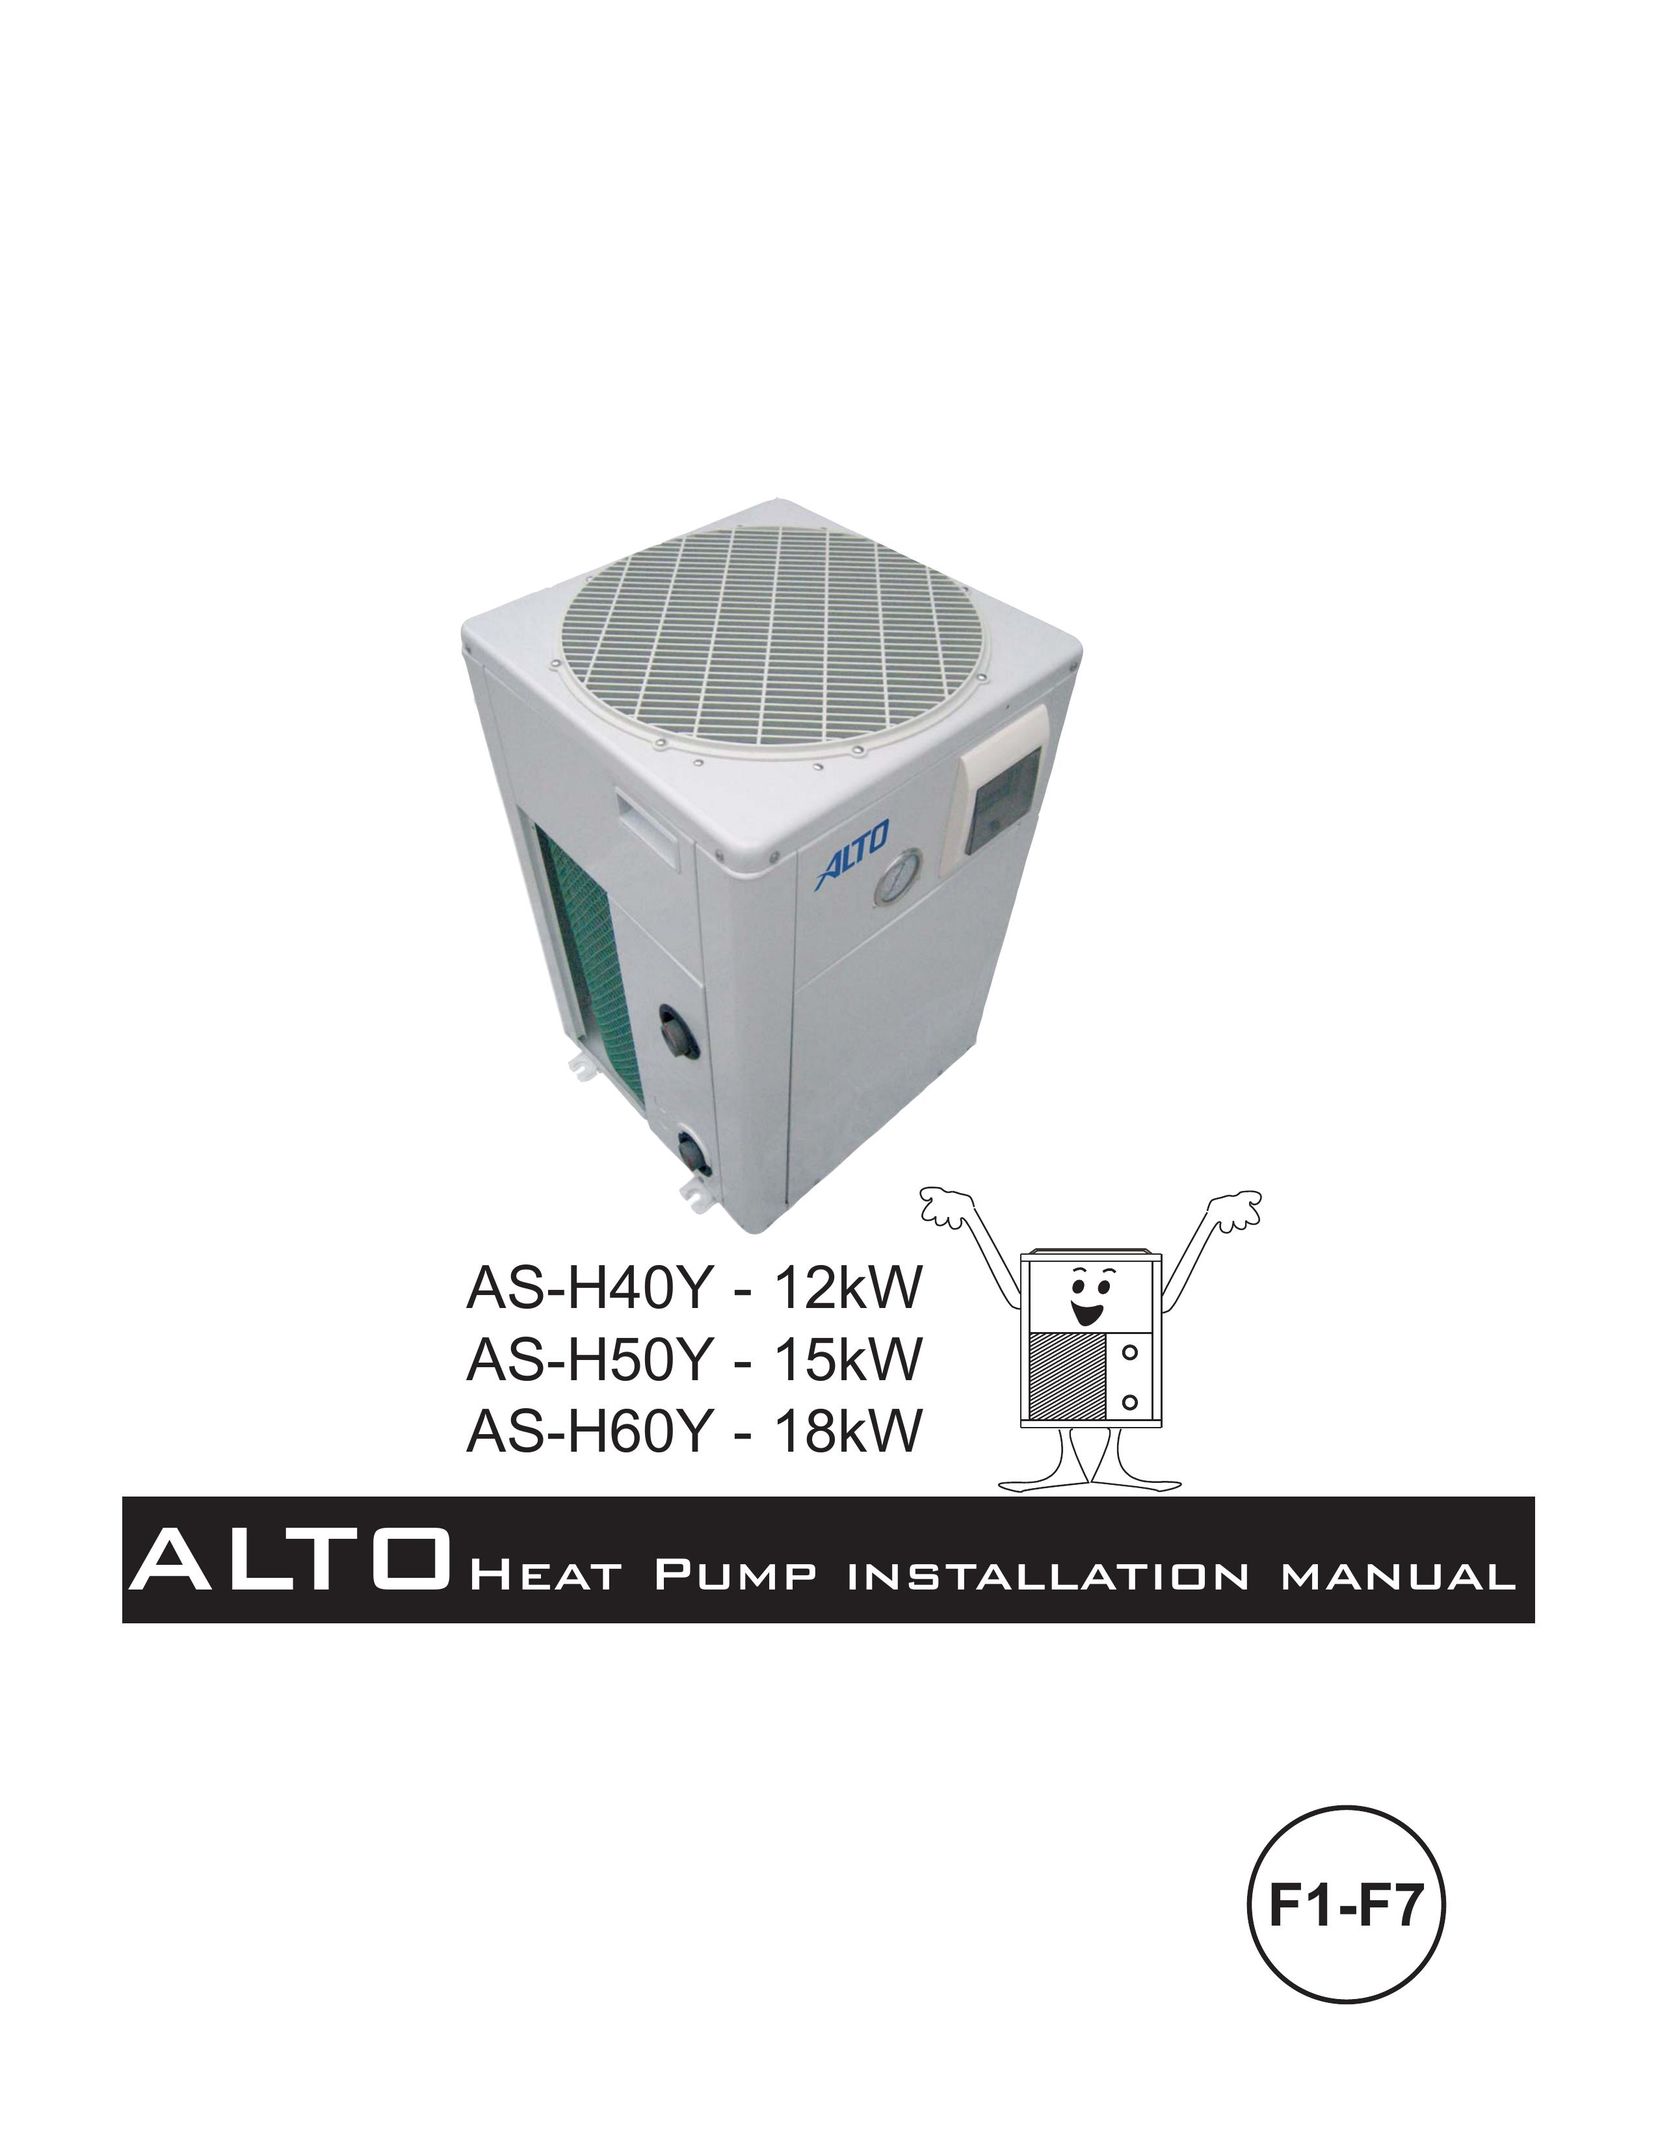 Sigma AS-H60Y Heat Pump User Manual